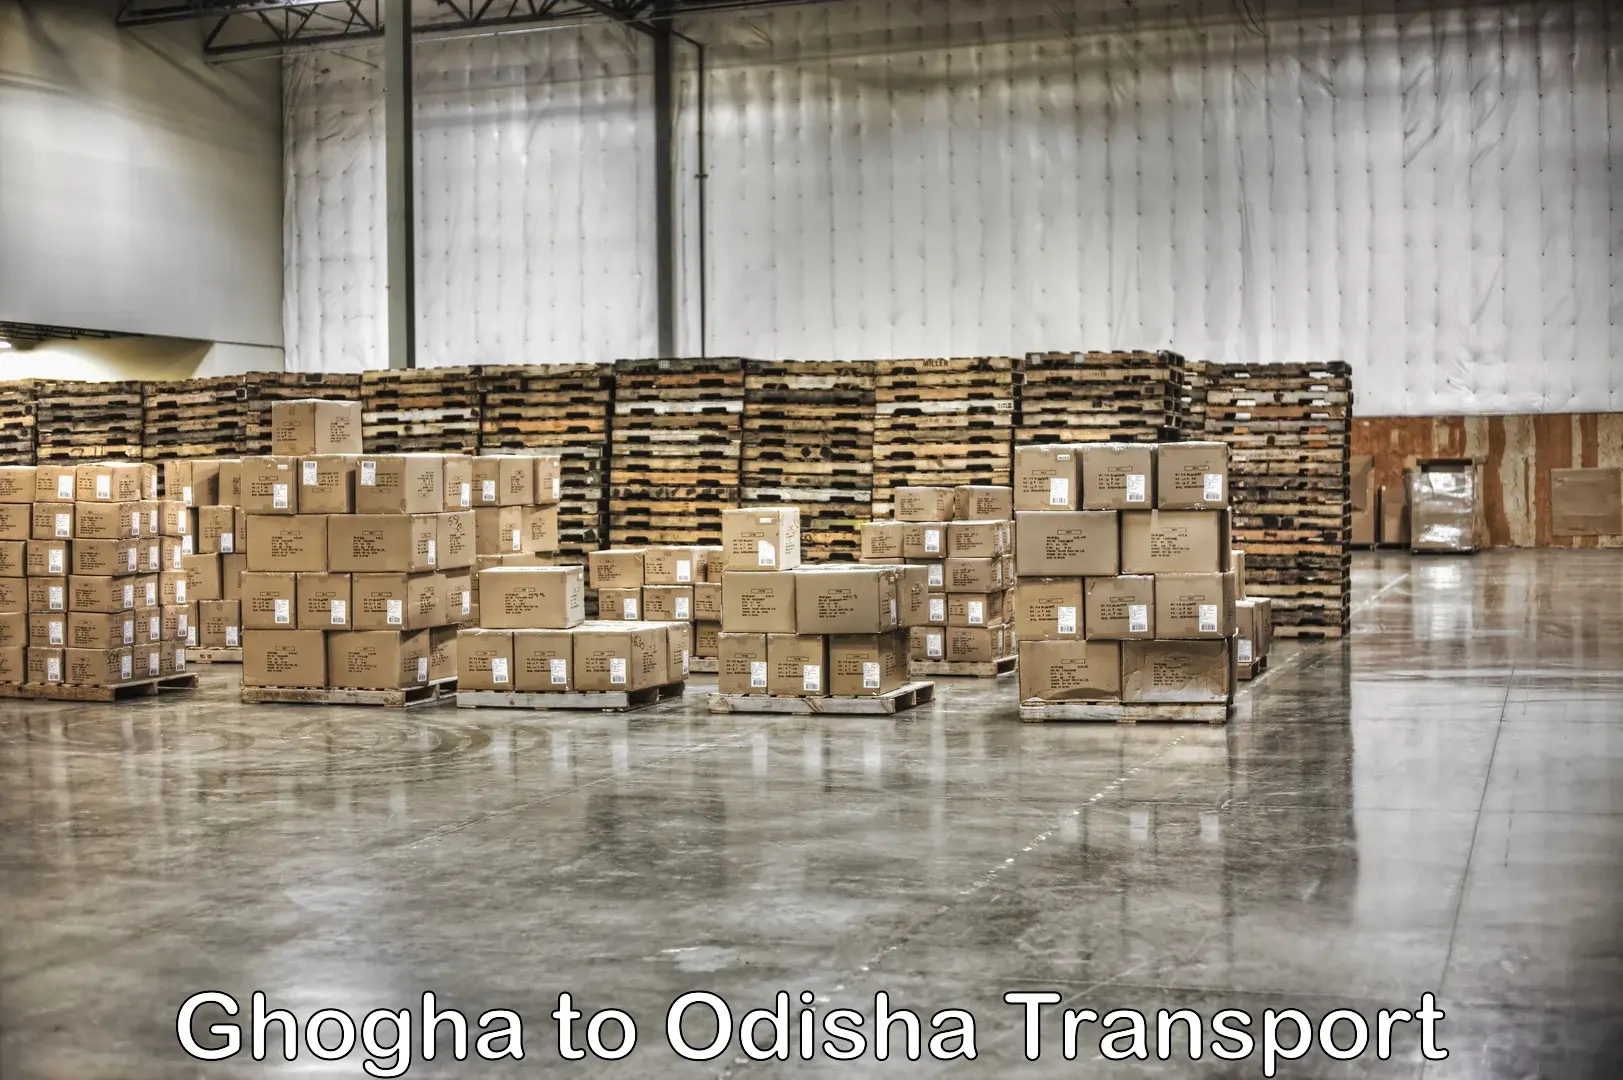 Truck transport companies in India Ghogha to Agarpada